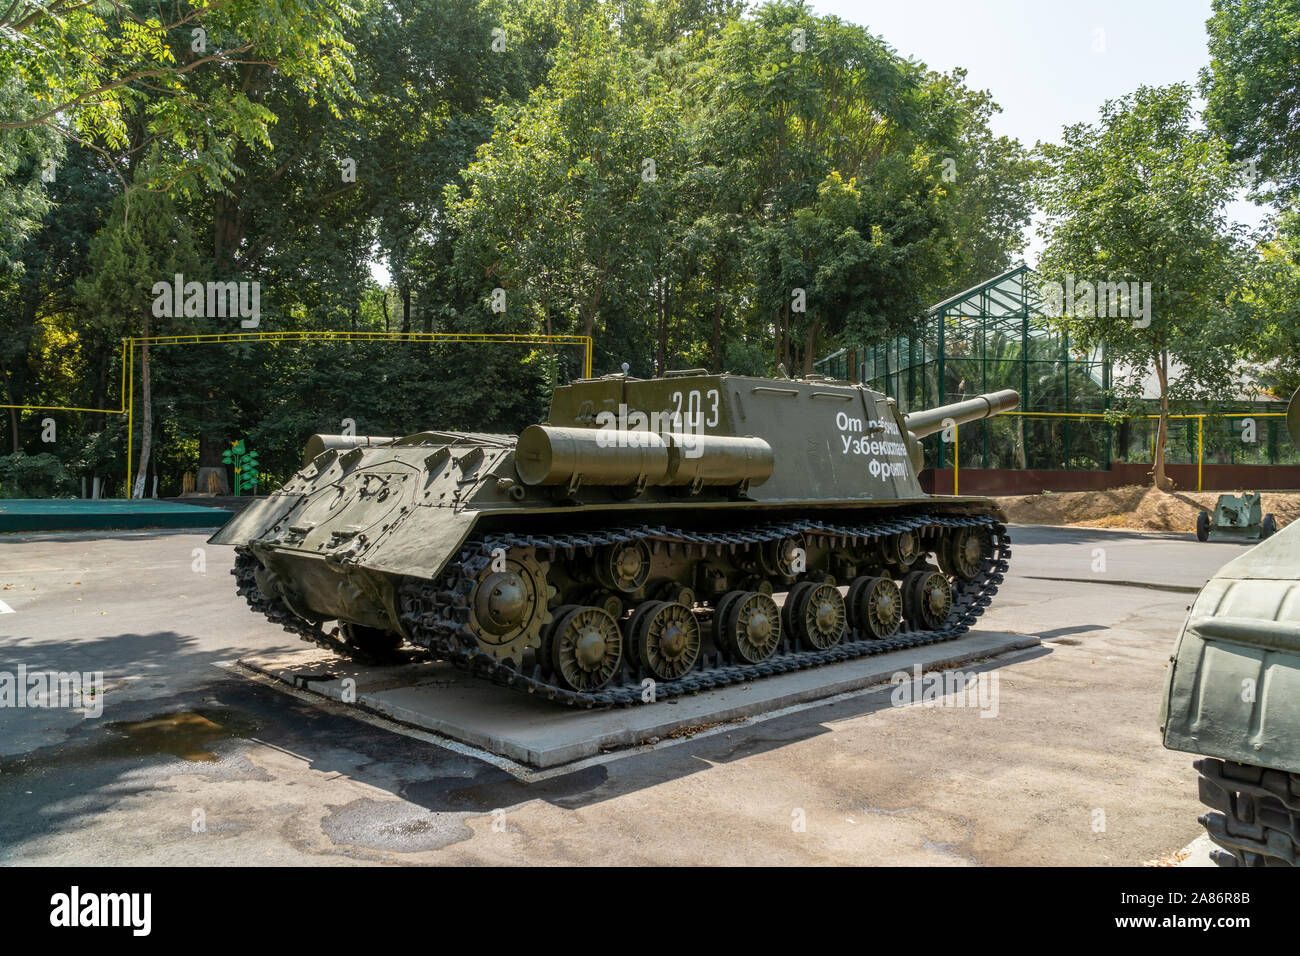 Tashkent, Uzbekistan - September 03, 2018: Old Soviet Union tank, SPG, that was used during WW2, outdoor military museum Stock Photo